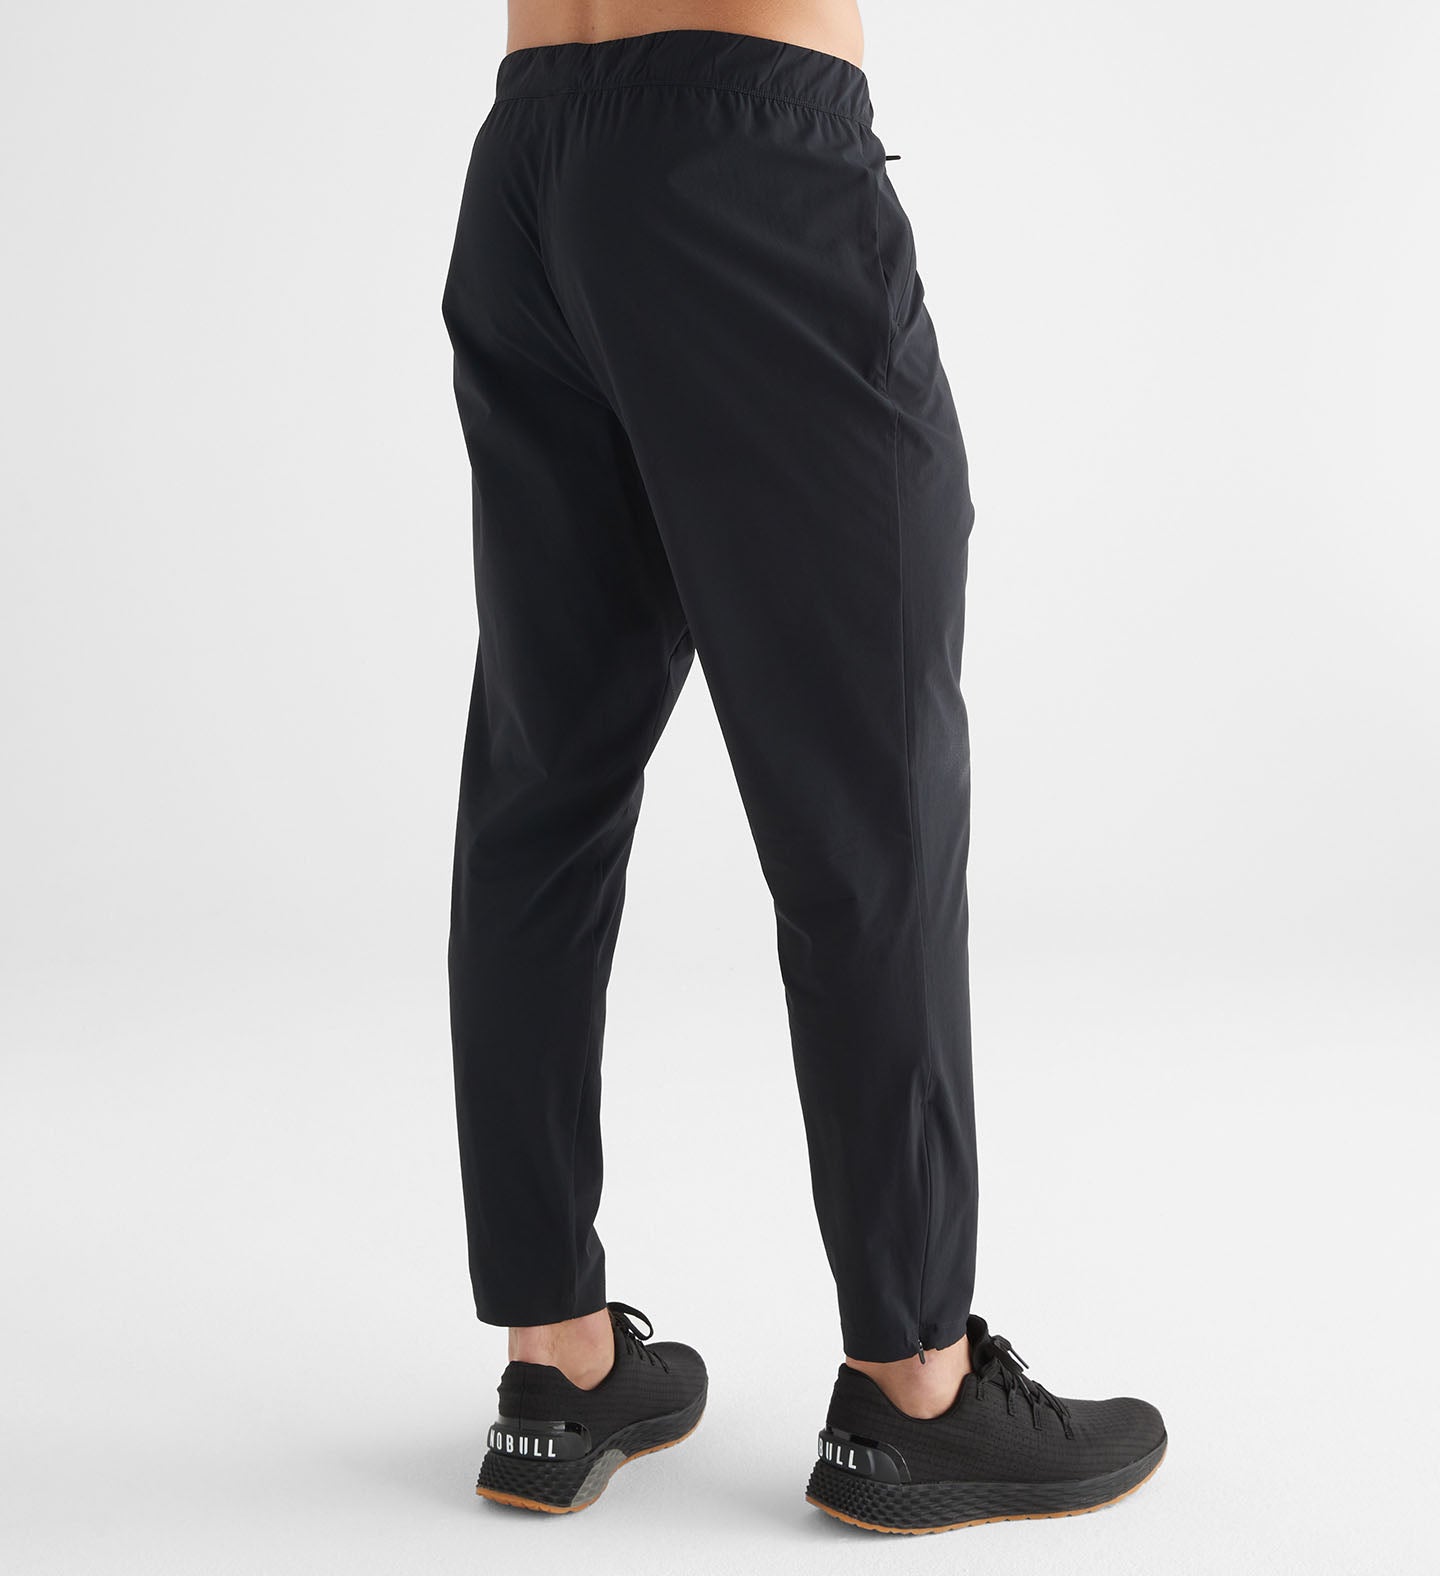 New Balance Men's Slim Fit Track Pant